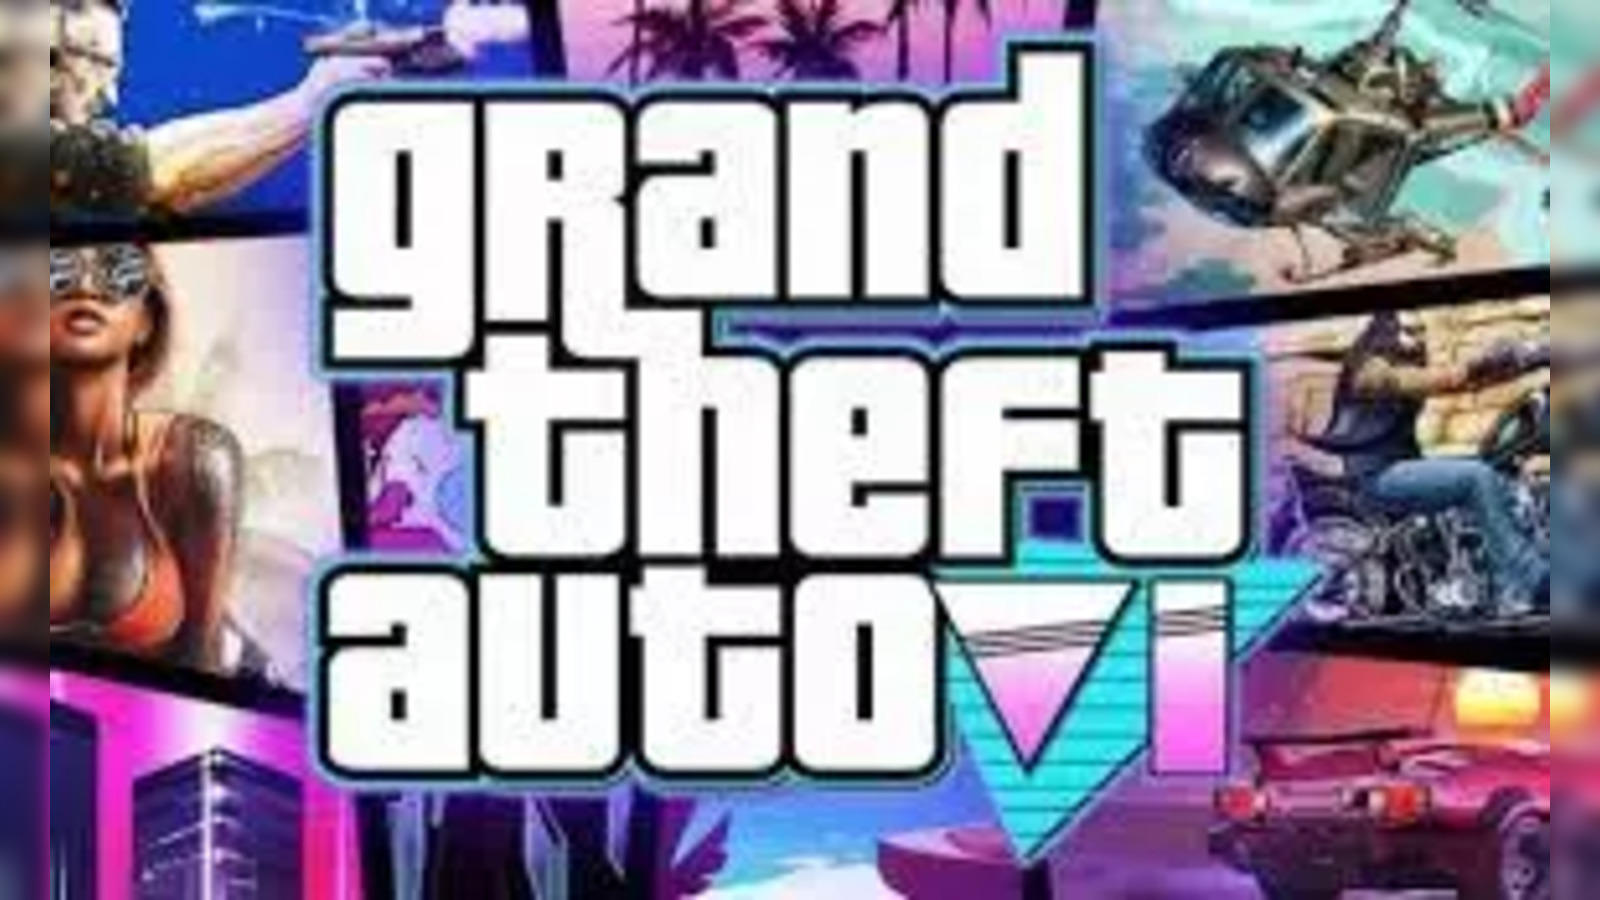 GTA 6 WhatsApp Status Video Download (Grand Theft Auto VI Status